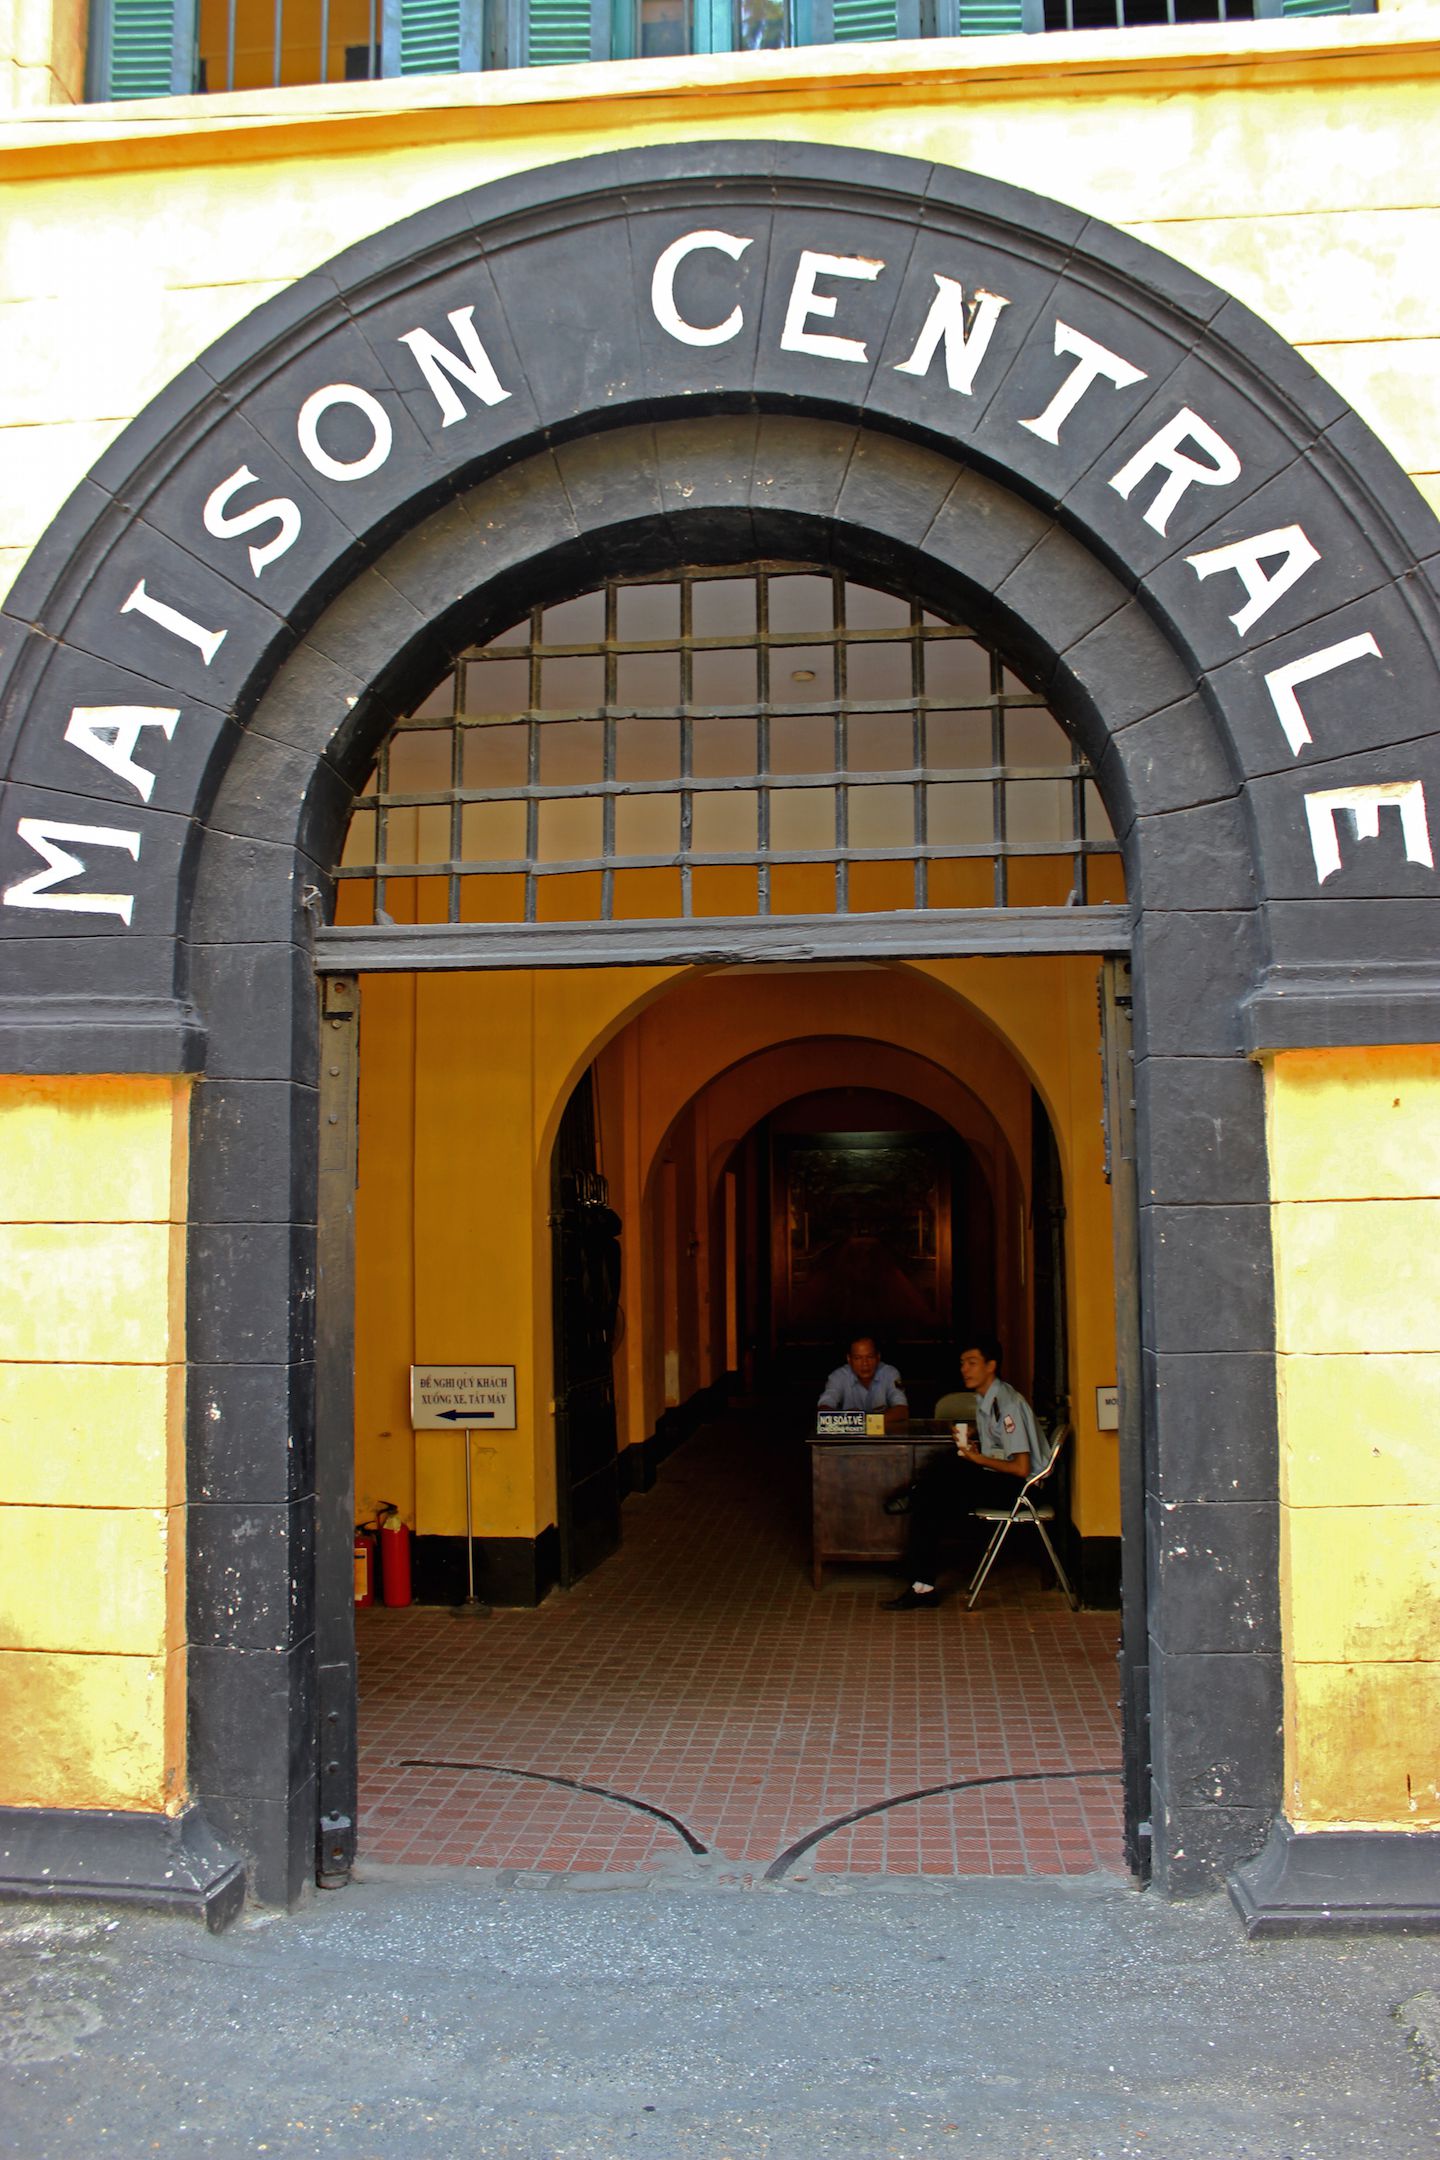 Main gate to the Hoa Lo Prison in Hanoi